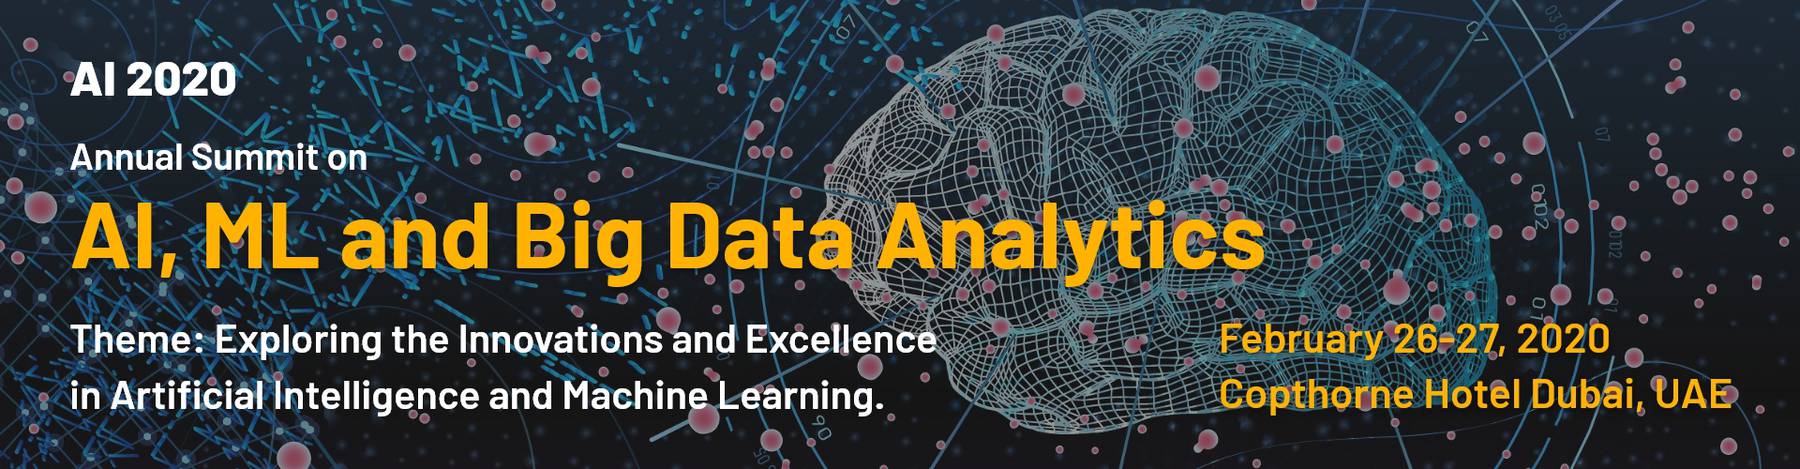 Annual Summit on AI, ML and Big Data Analytics Dubai 2020